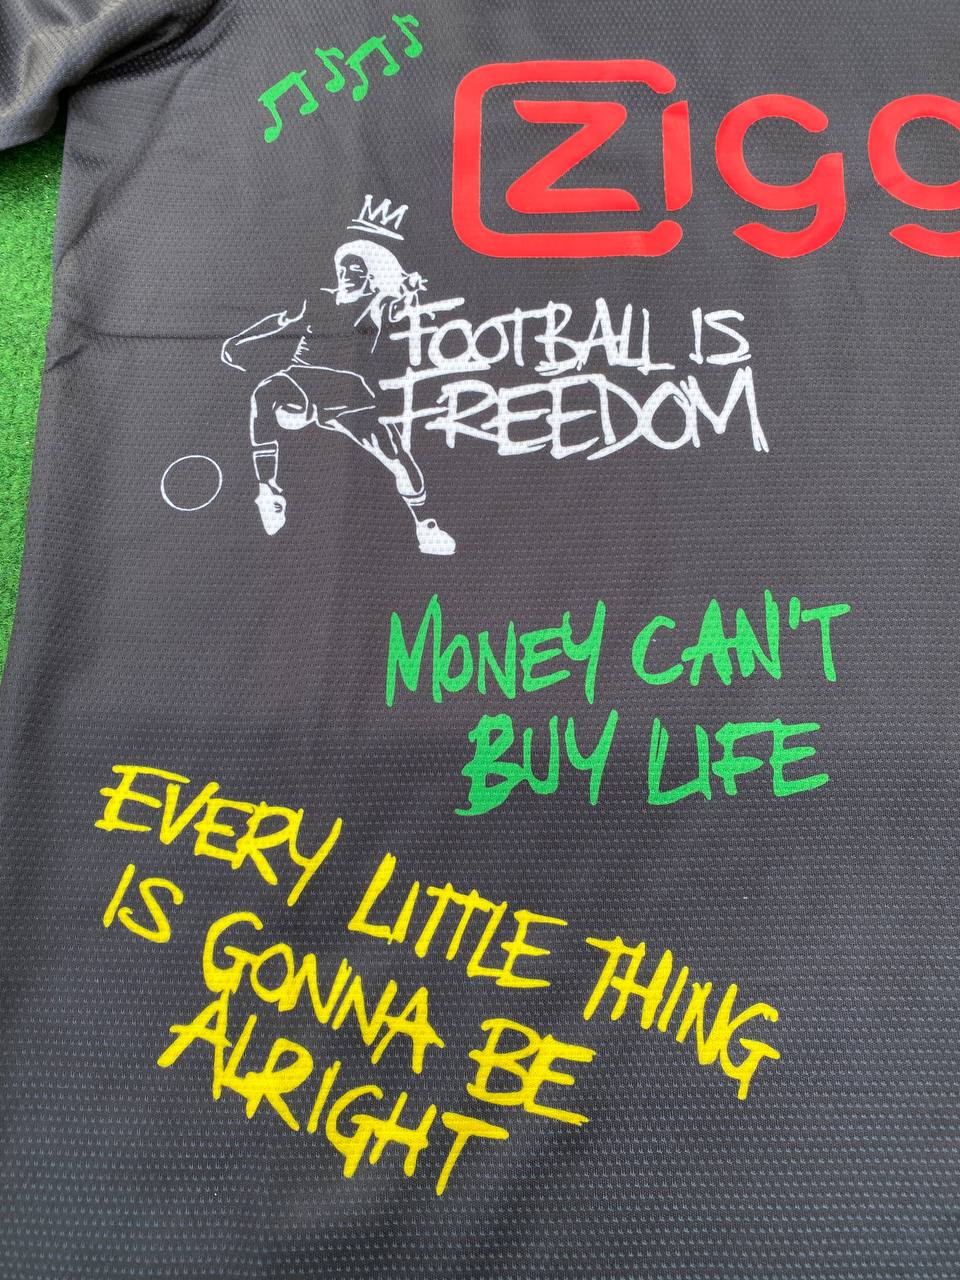 AFC Ajax x Bob Marley Üç Küçük Kuşlar Hatıra Özel Üretim Futbol Forması Maillot Trikot Maglia Camiseta